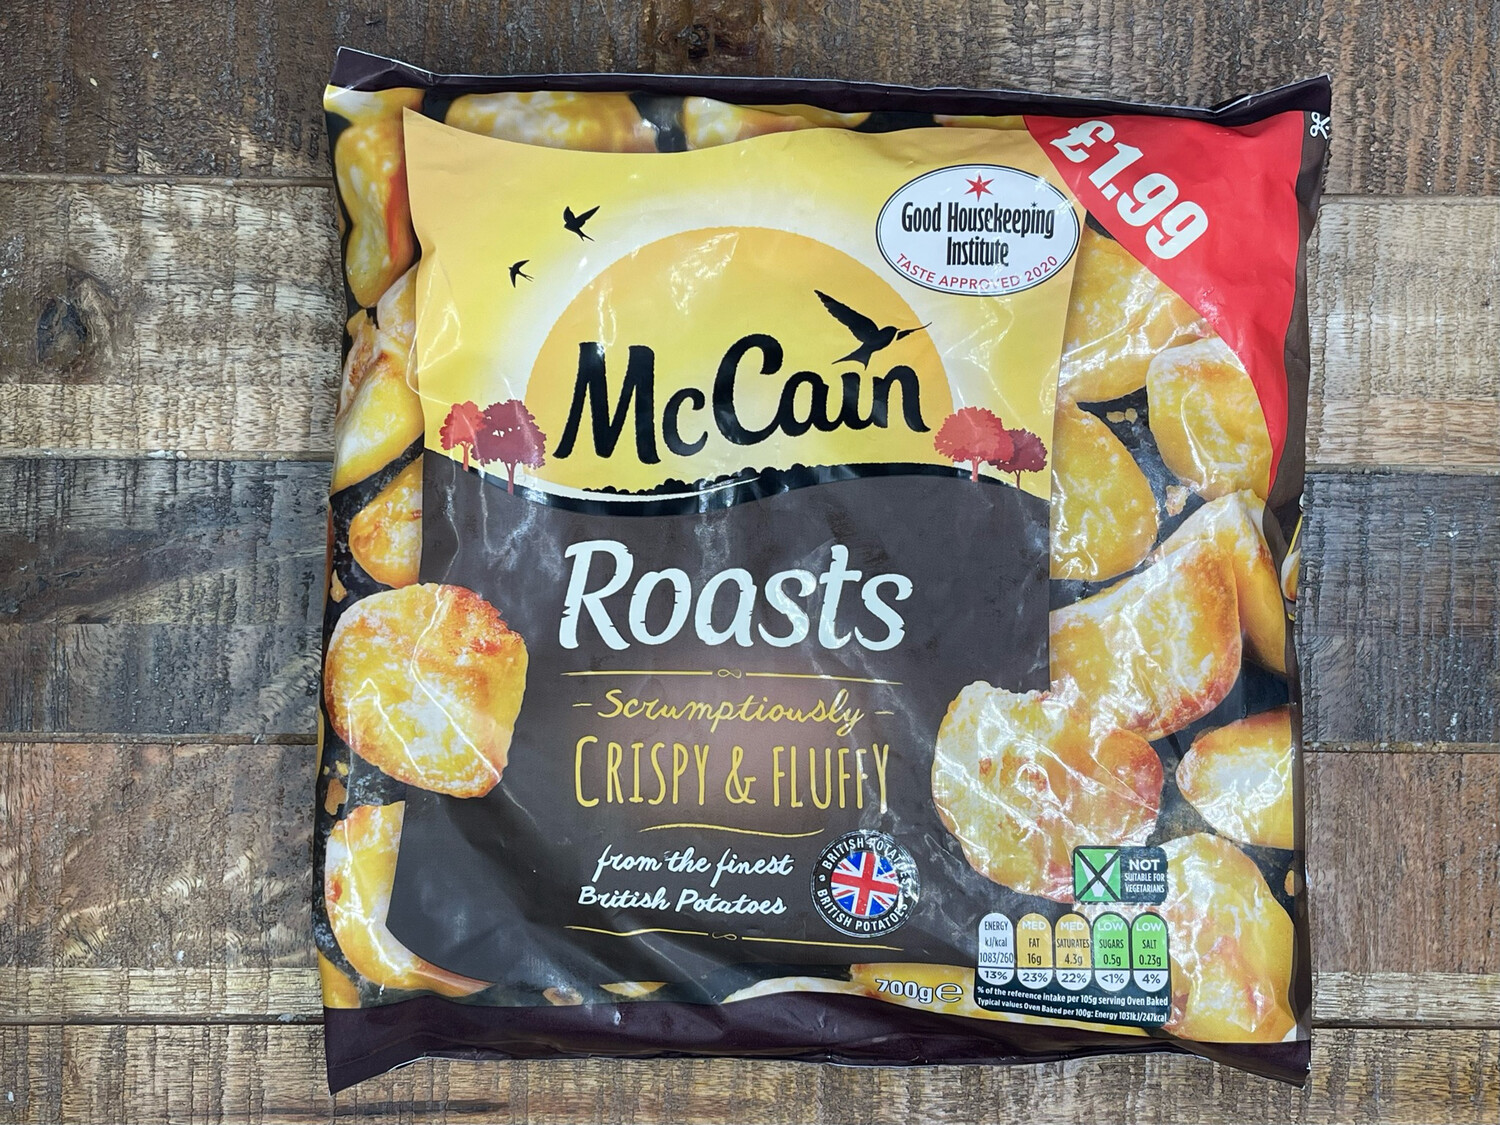 McCain Roasts Crispy & Fluffy British Potatoes